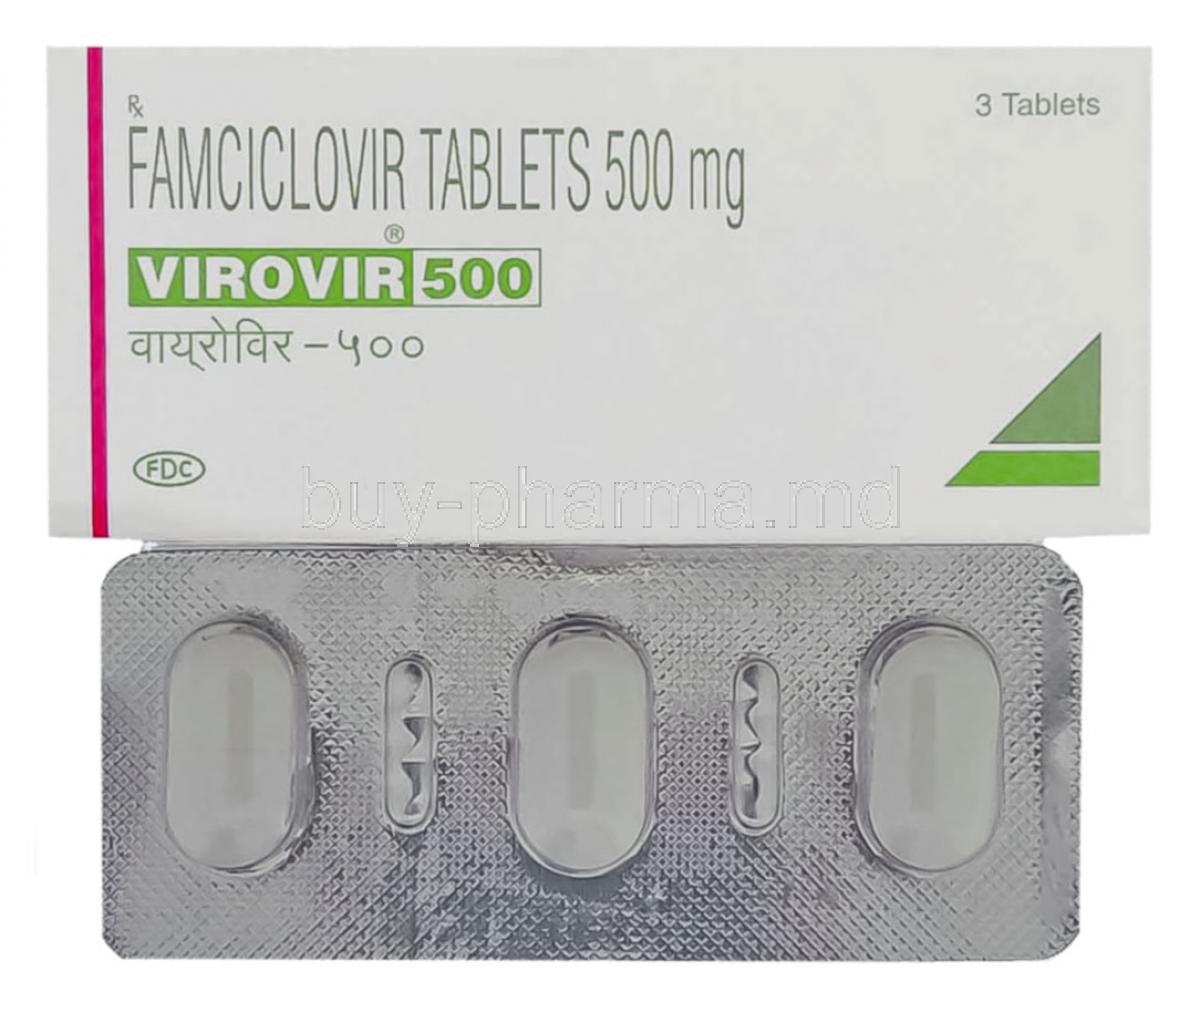 Virovir, Famciclovir 500 mg tablet and box